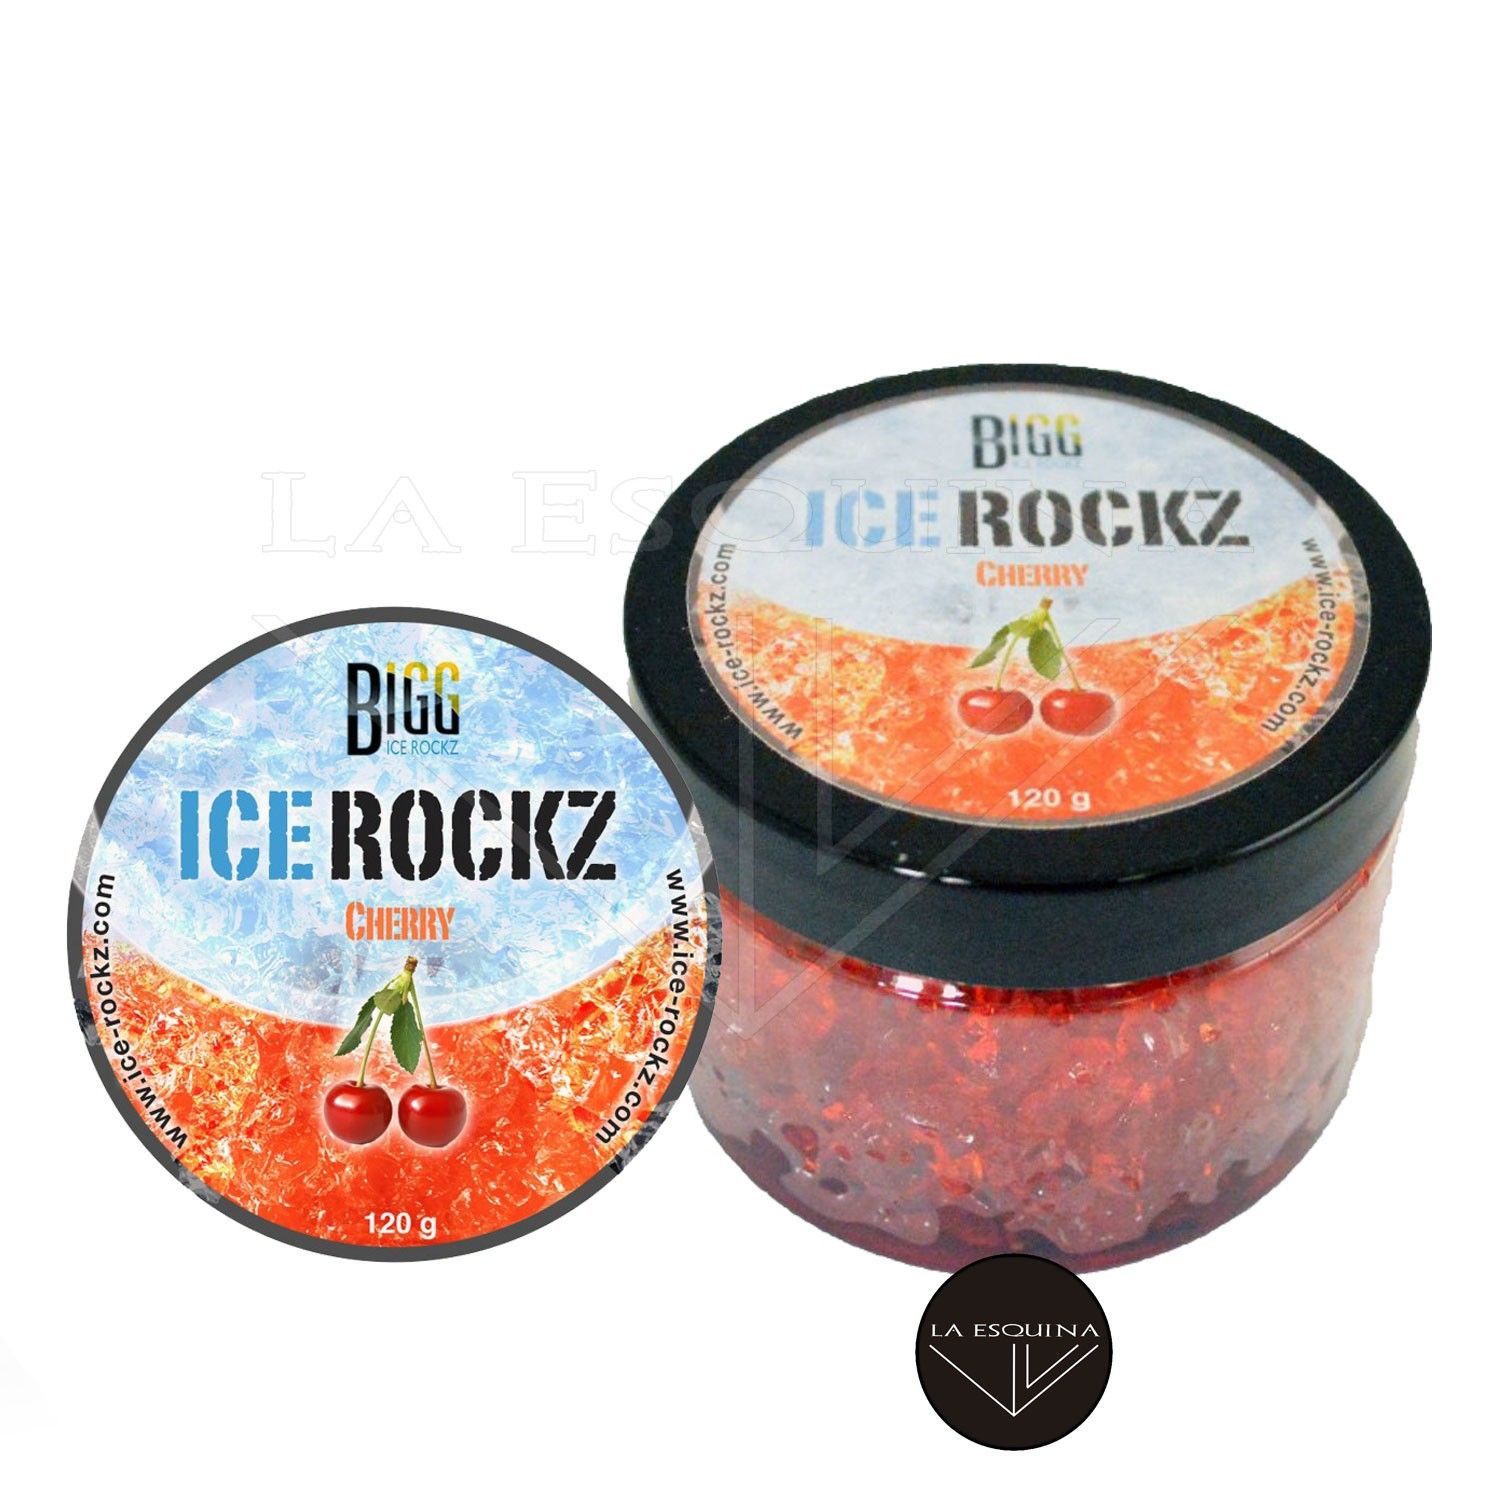 Gel Rock de Cachimba BIGG ICE ROCKZ – 120 g. – Cherry